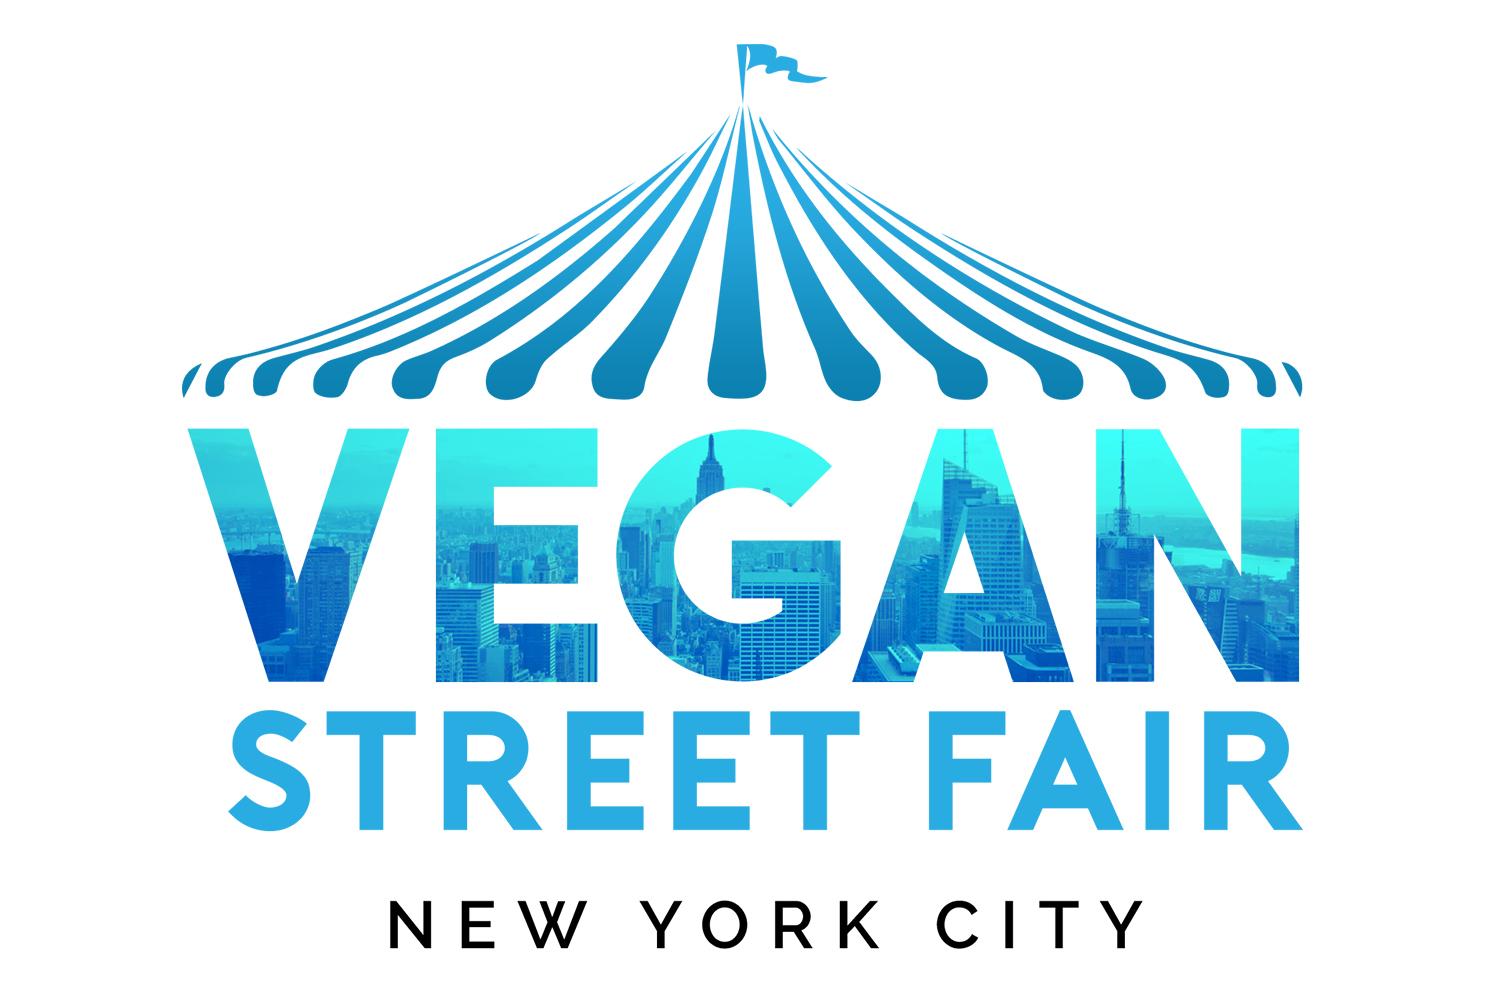 Fair Logo - Vegan Street Fair Logo ReDesign - The Vegan Designer